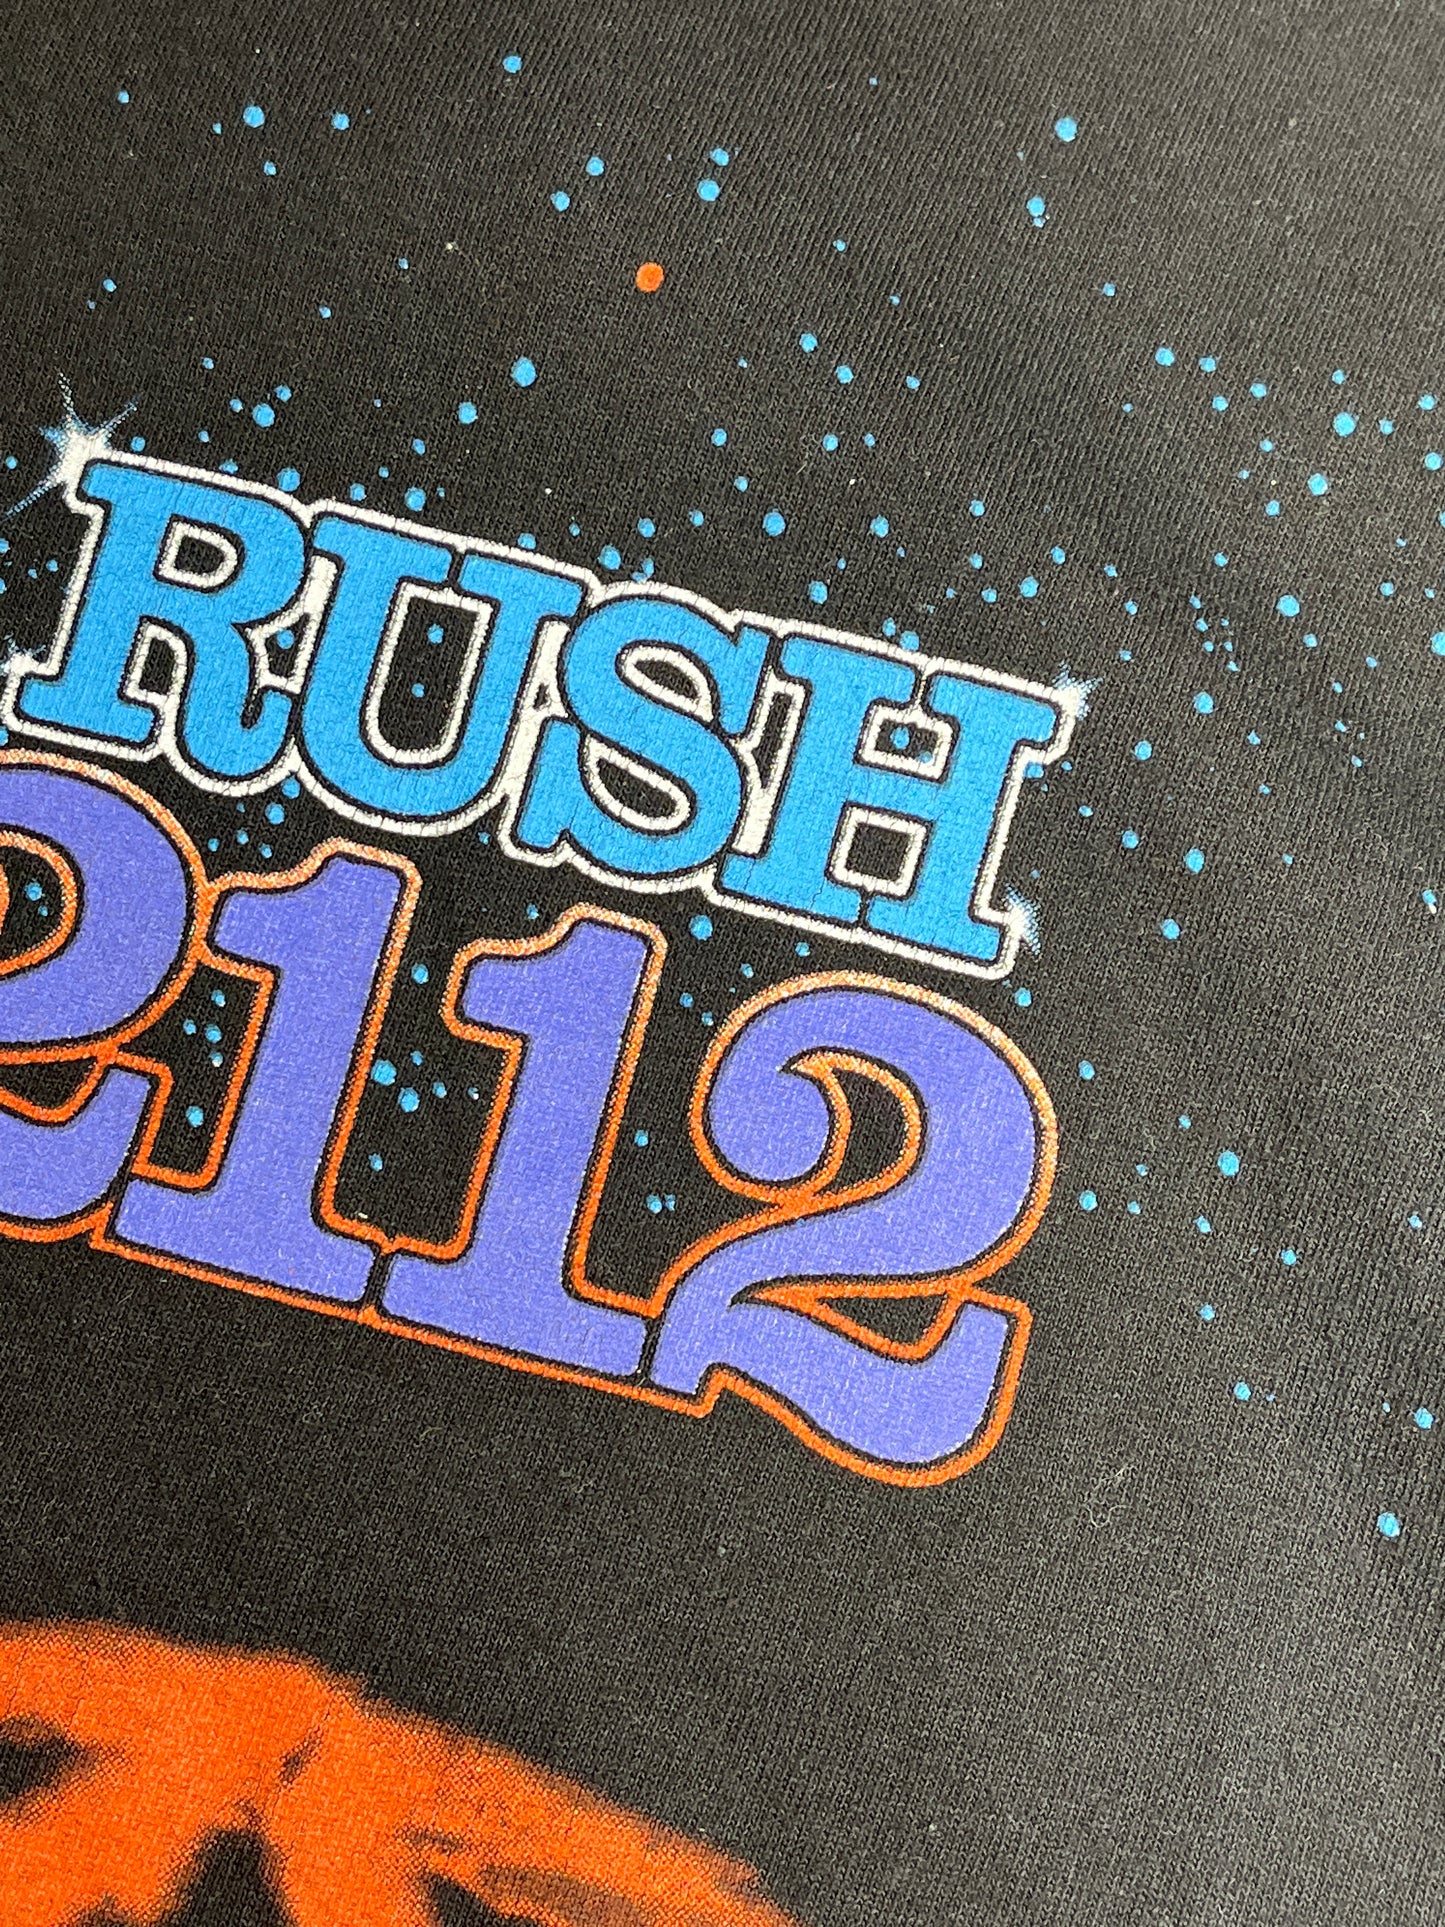 Vintage Rush Band T-Shirt 2112